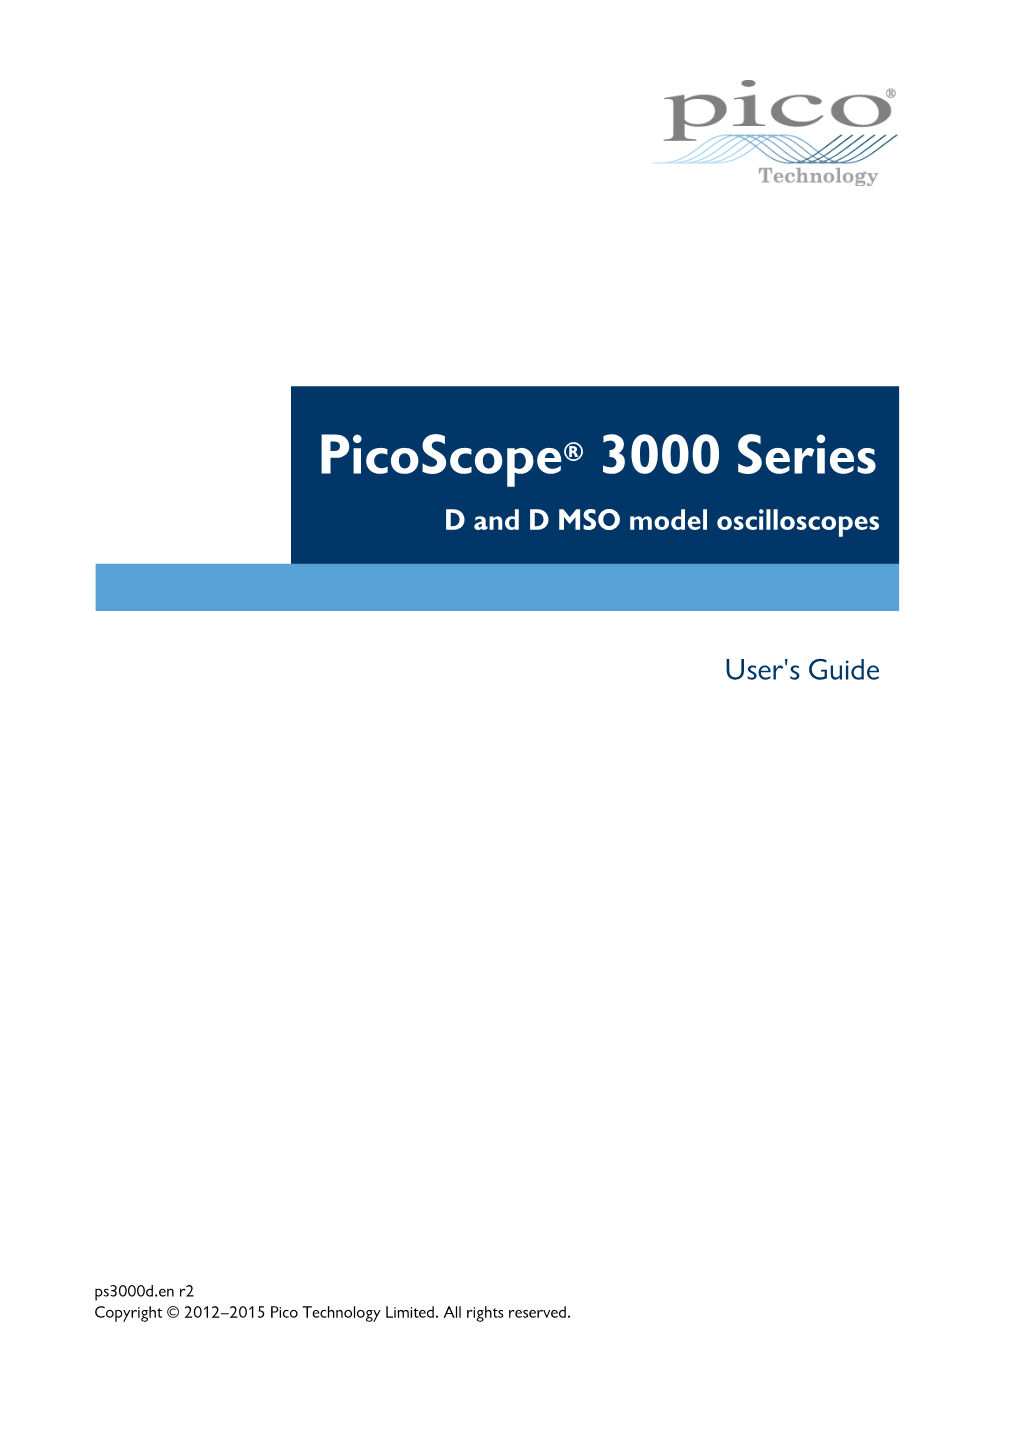 Picoscope 3000D Series User's Guide